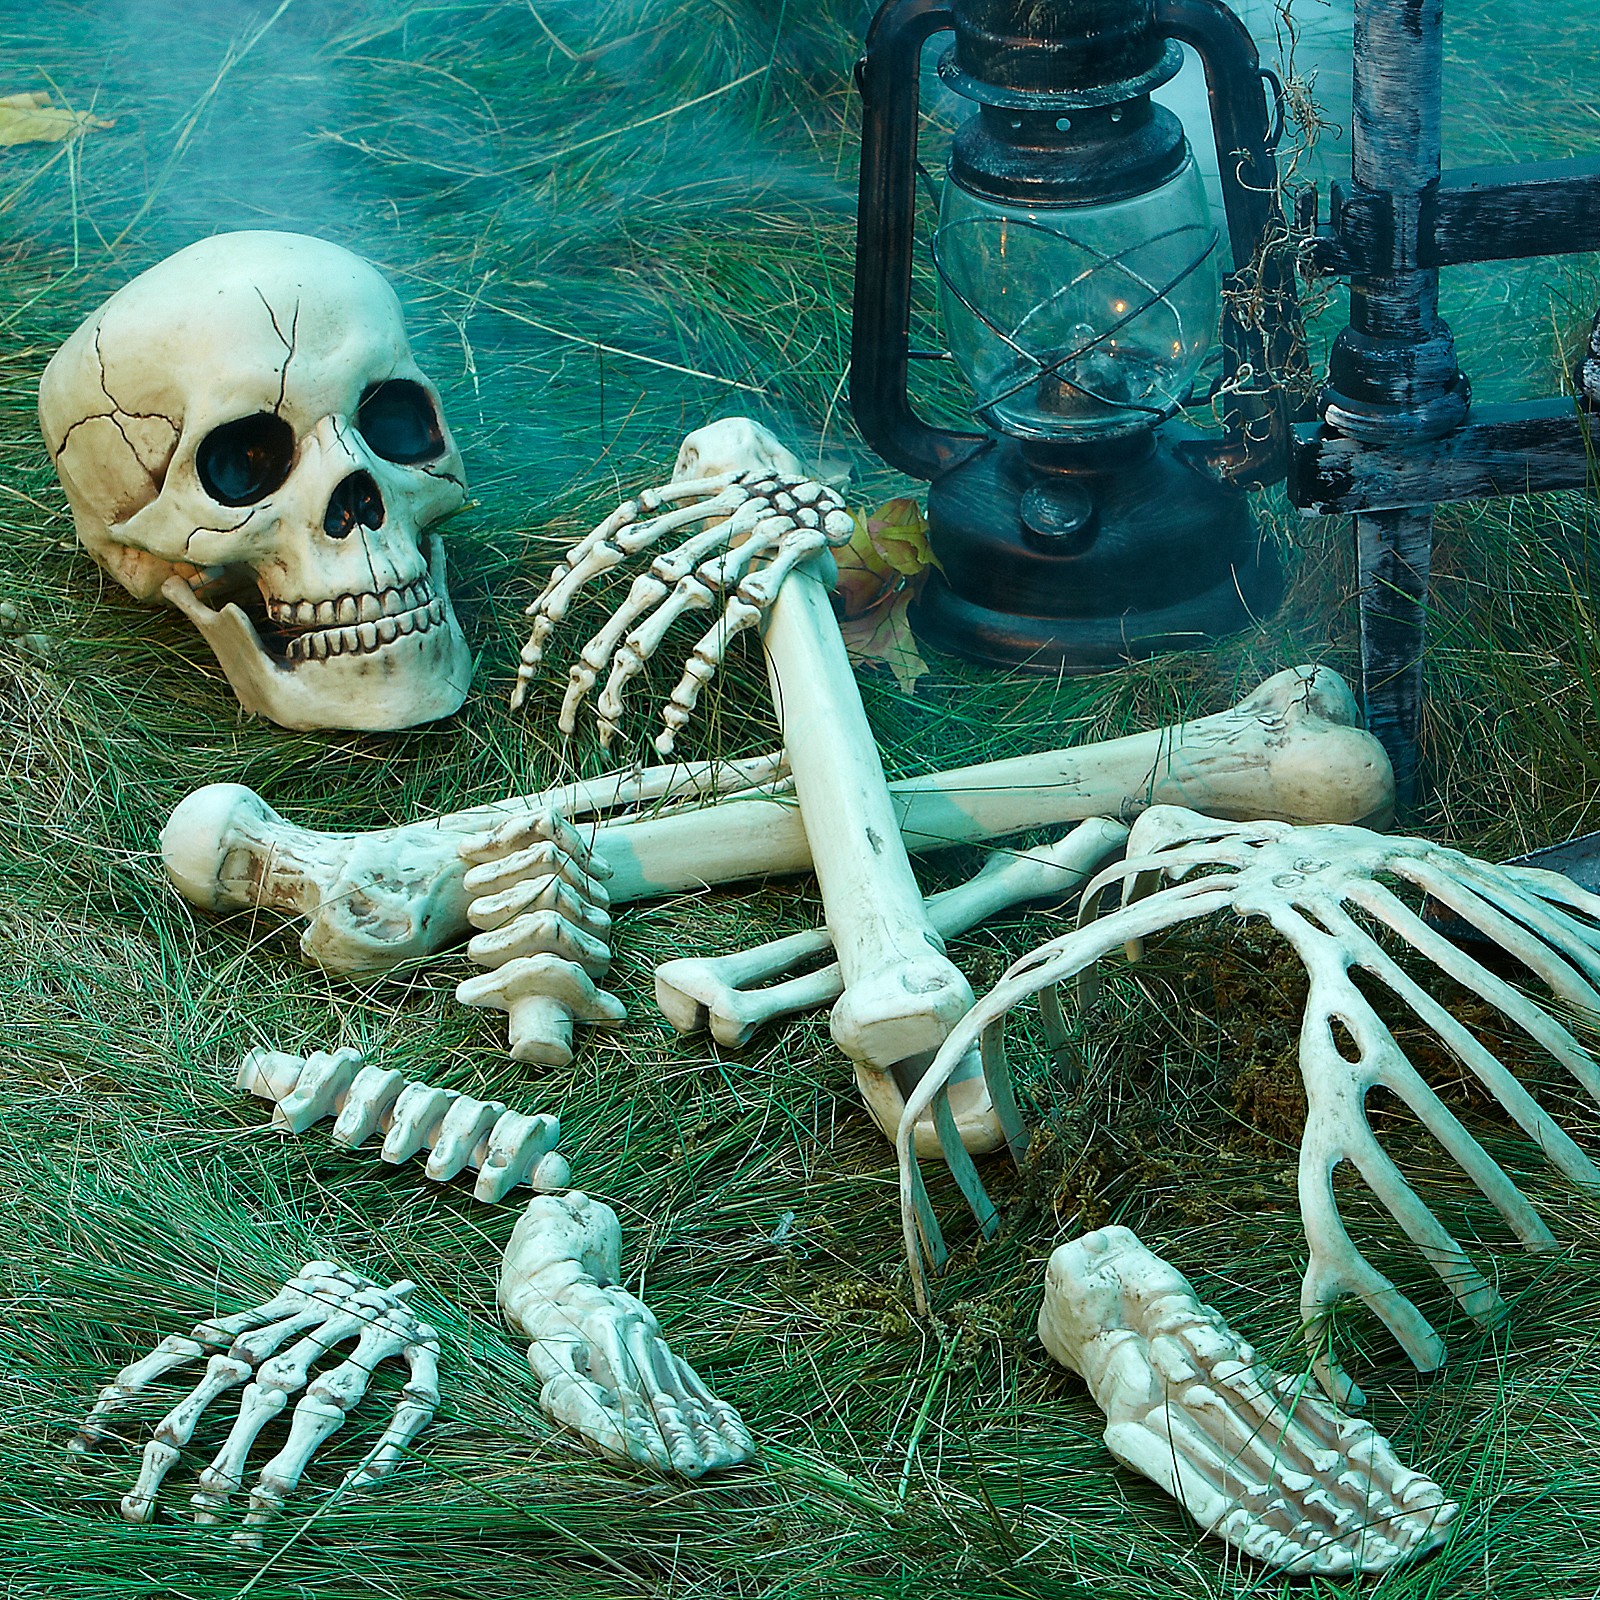 Stephen King's “Bag of Bones” Gets A Creepy Backstory